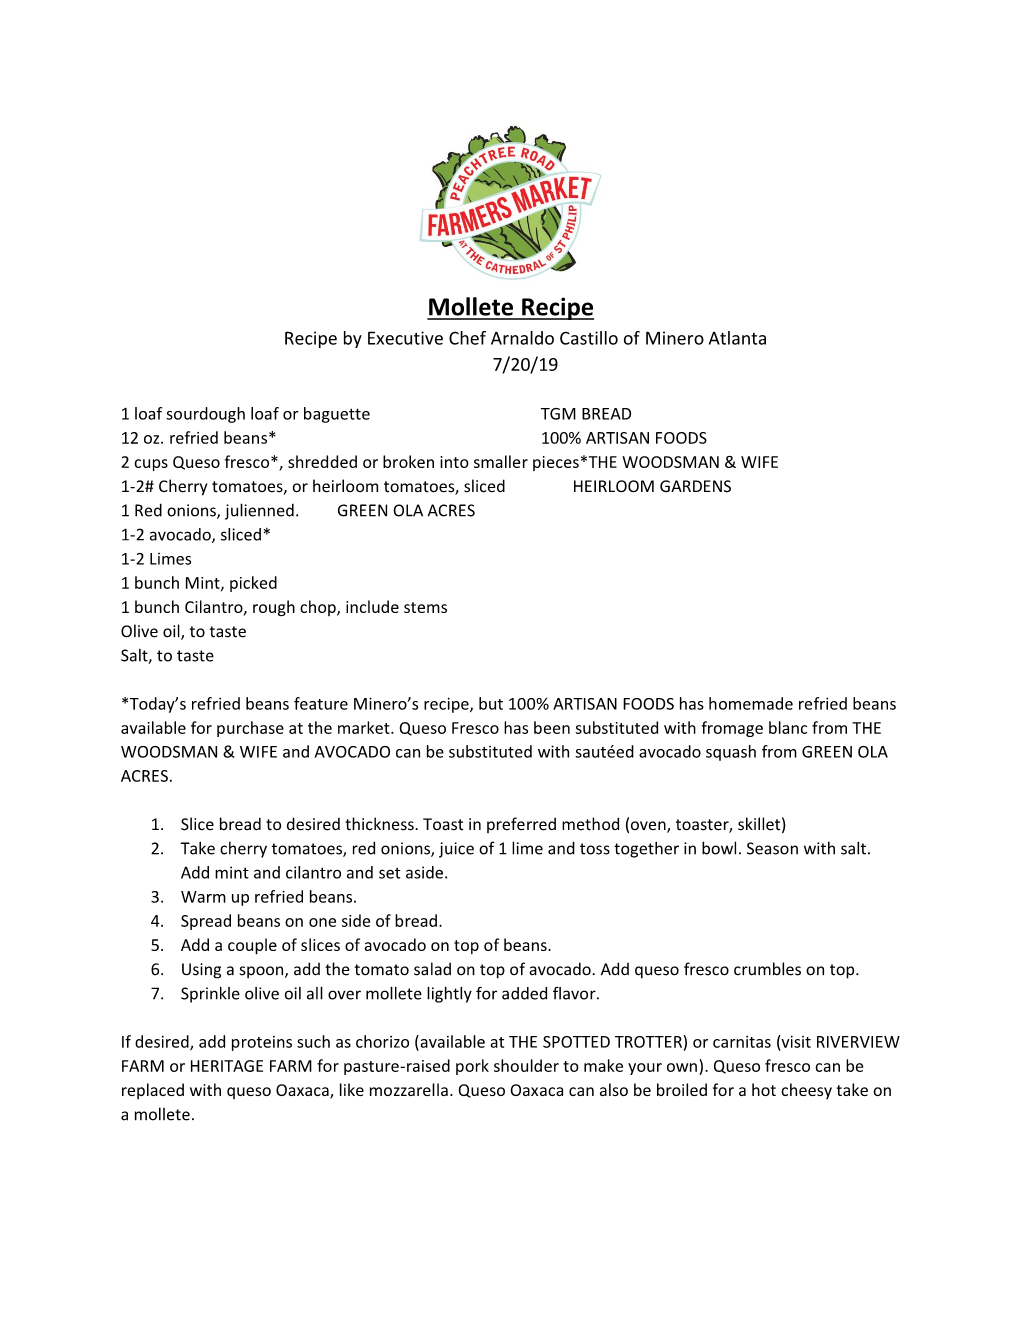 Mollete Recipe Recipe by Executive Chef Arnaldo Castillo of Minero Atlanta 7/20/19